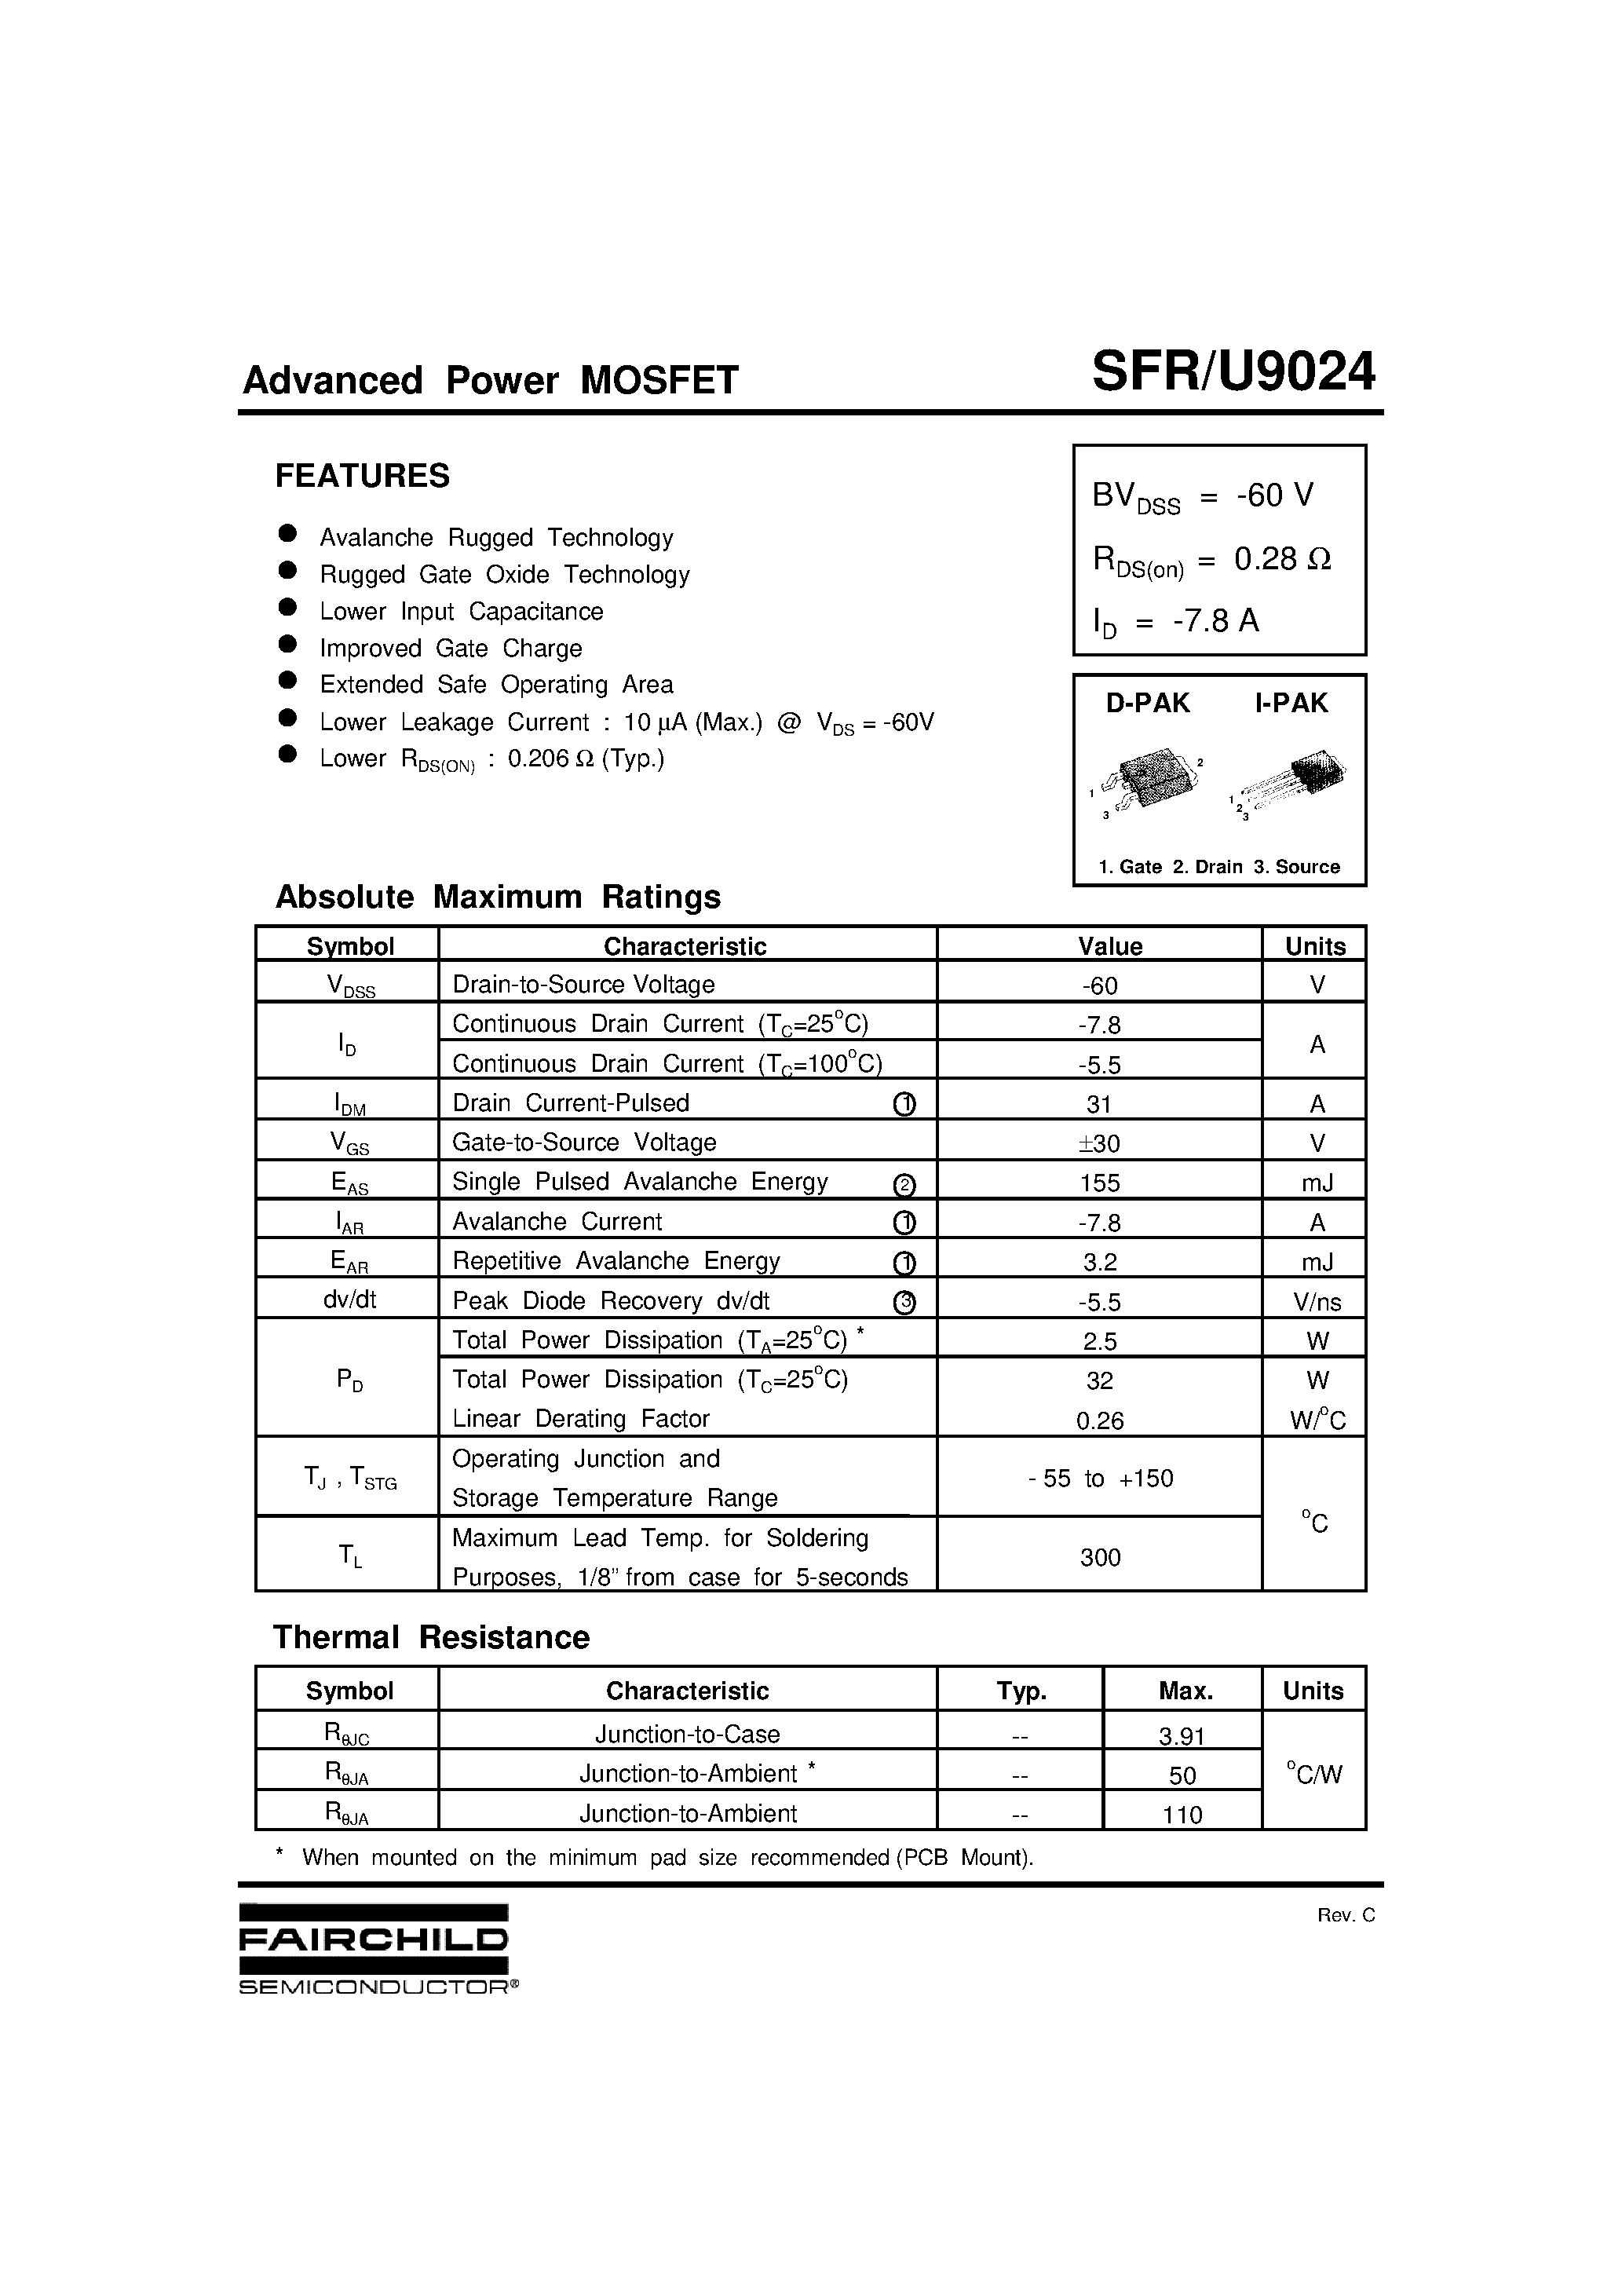 Datasheet SFRU9024 - Advanced Power MOSFET page 1